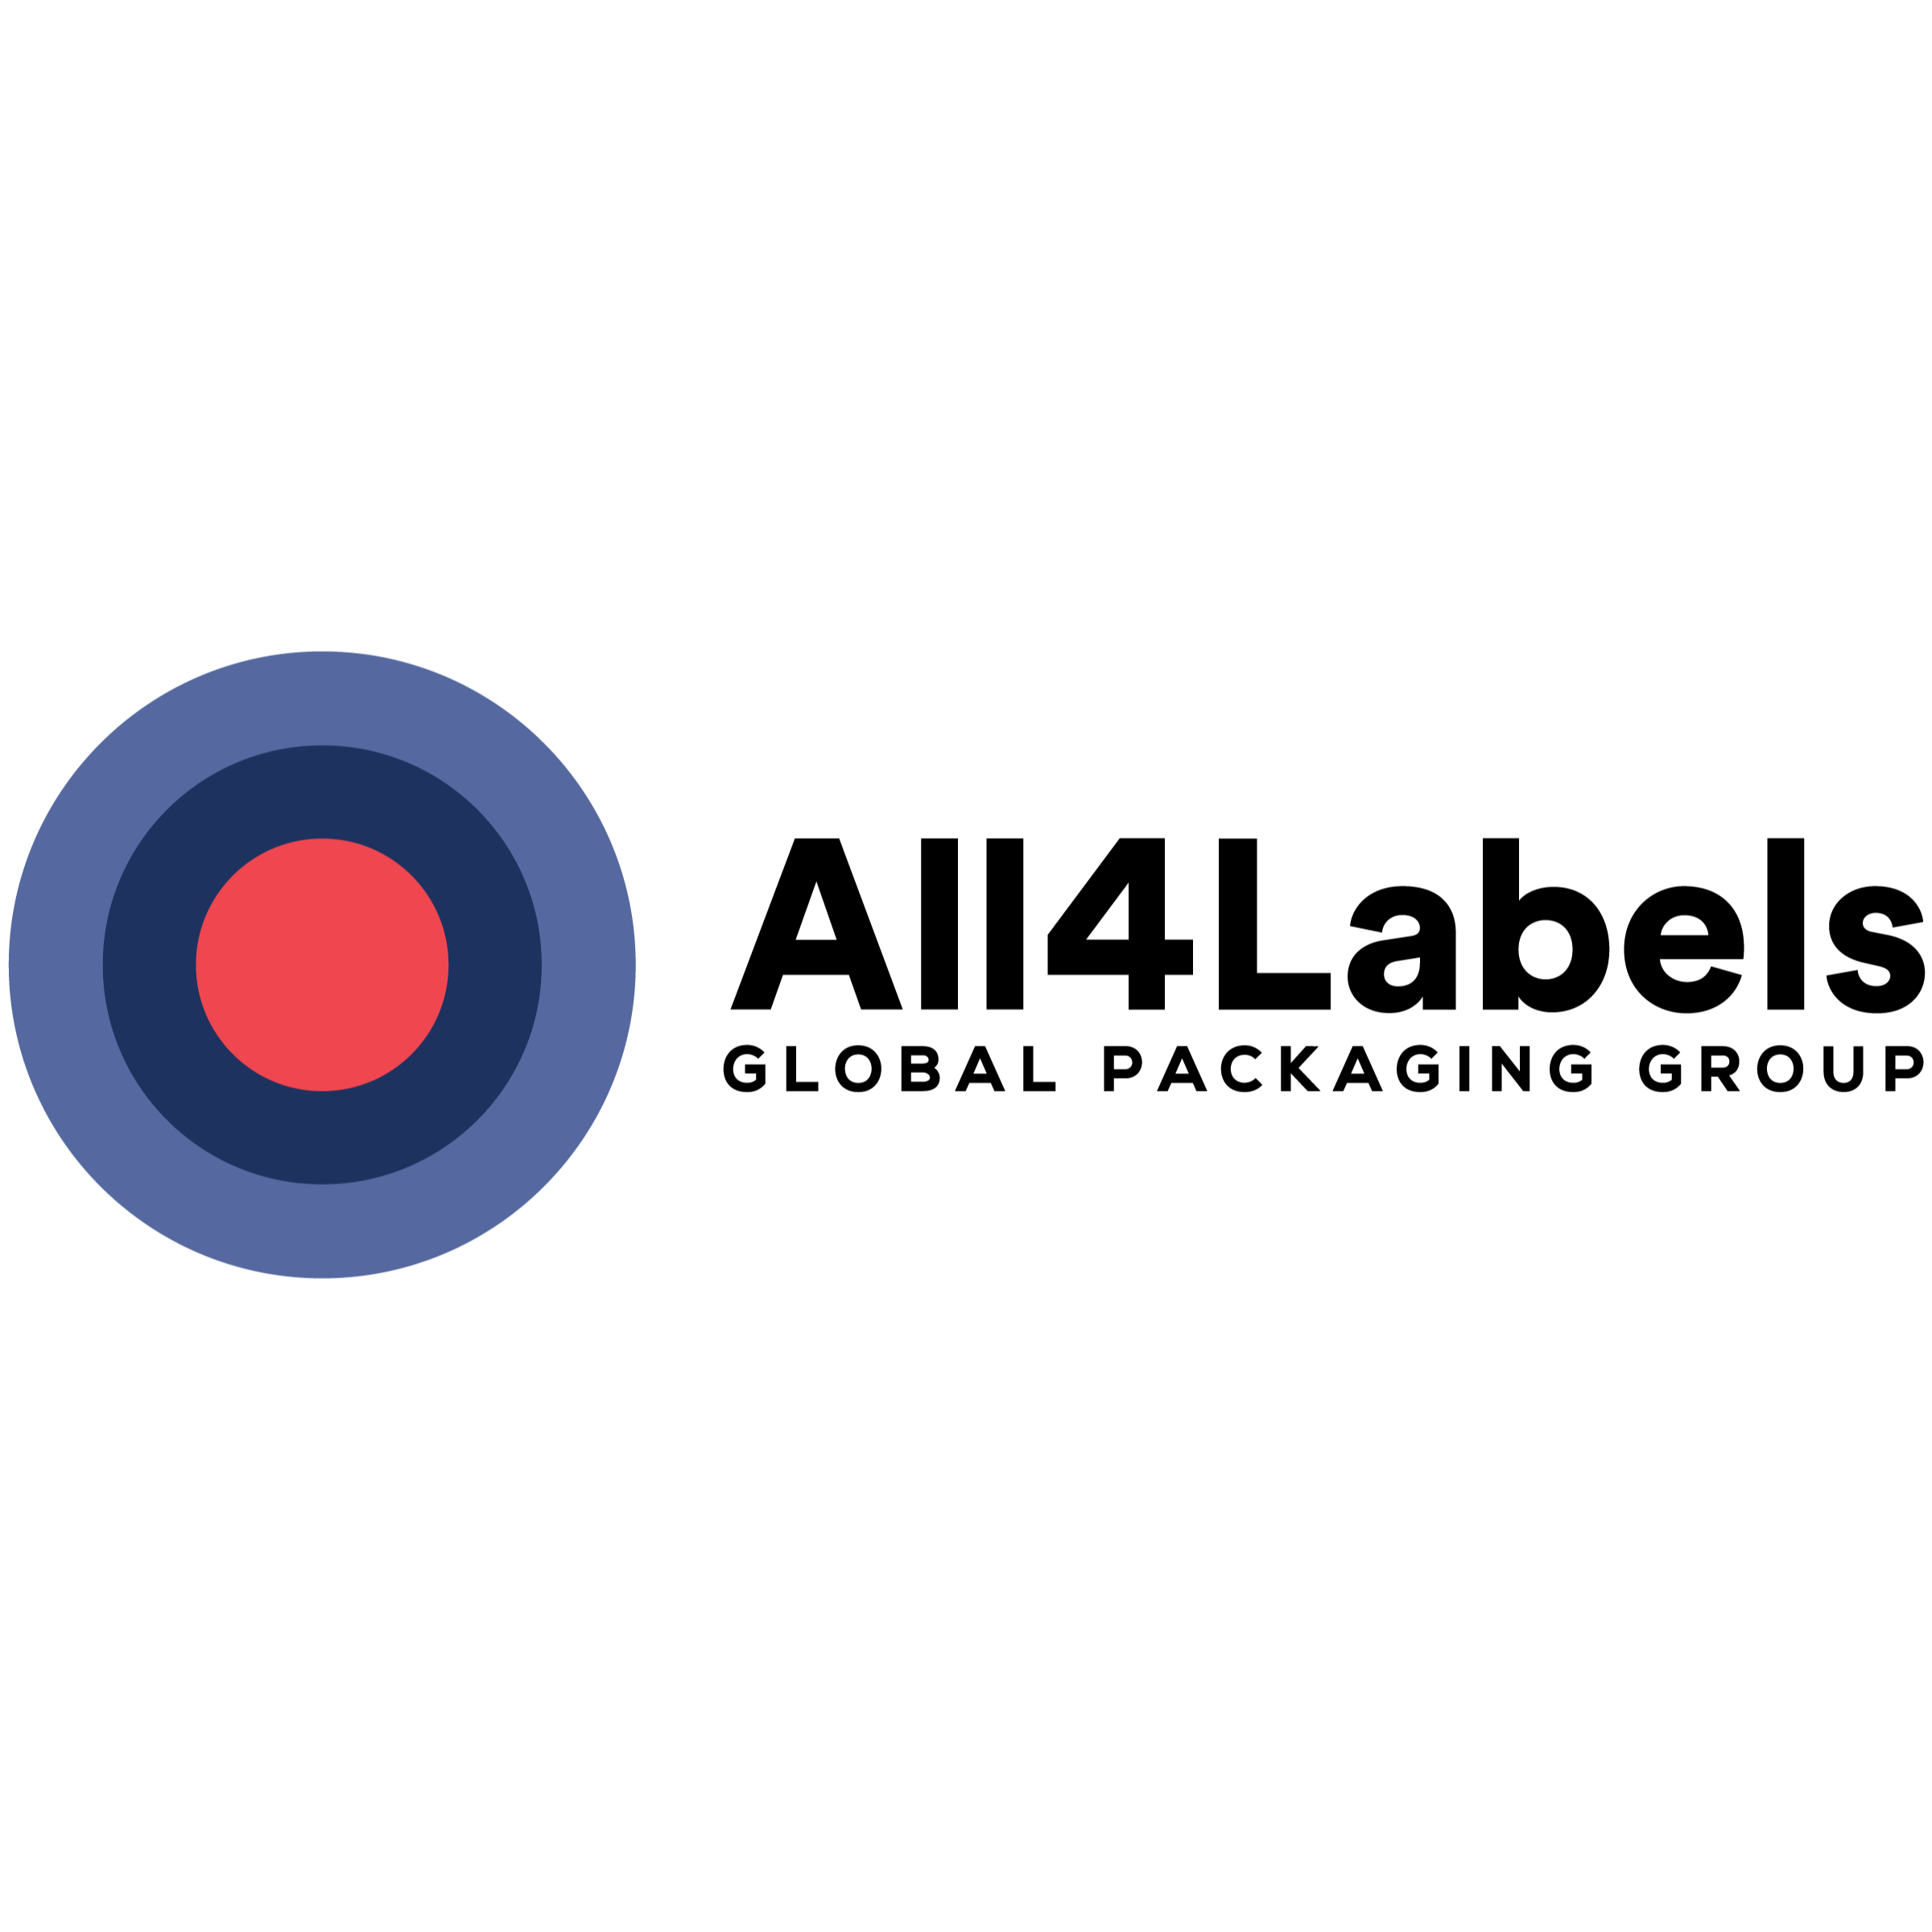 Logo All4Labels Erfurt GmbH, Global Packaging Group, Verpackungslösungen, Etikettendruckerei, Label, Druckerei